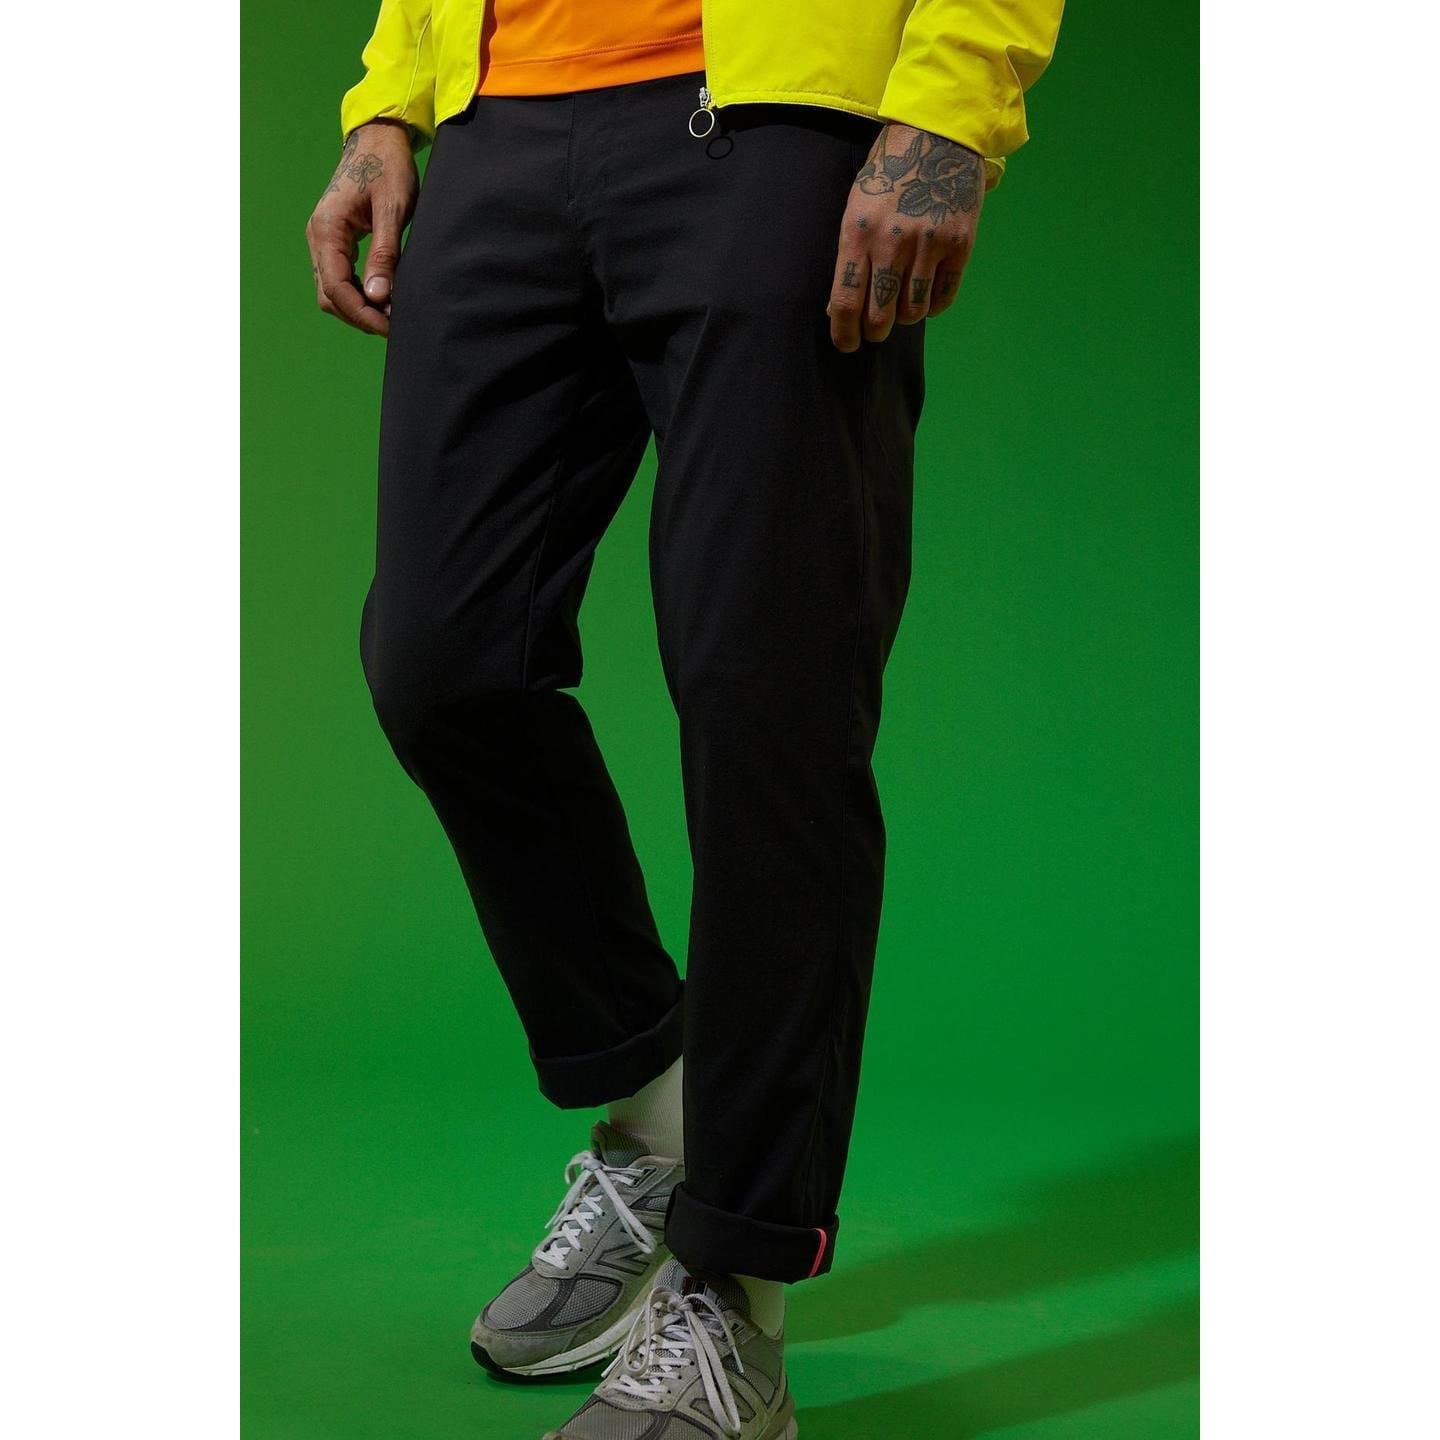 rapha technical trousers carbon grey default velodrom barcelona 205366